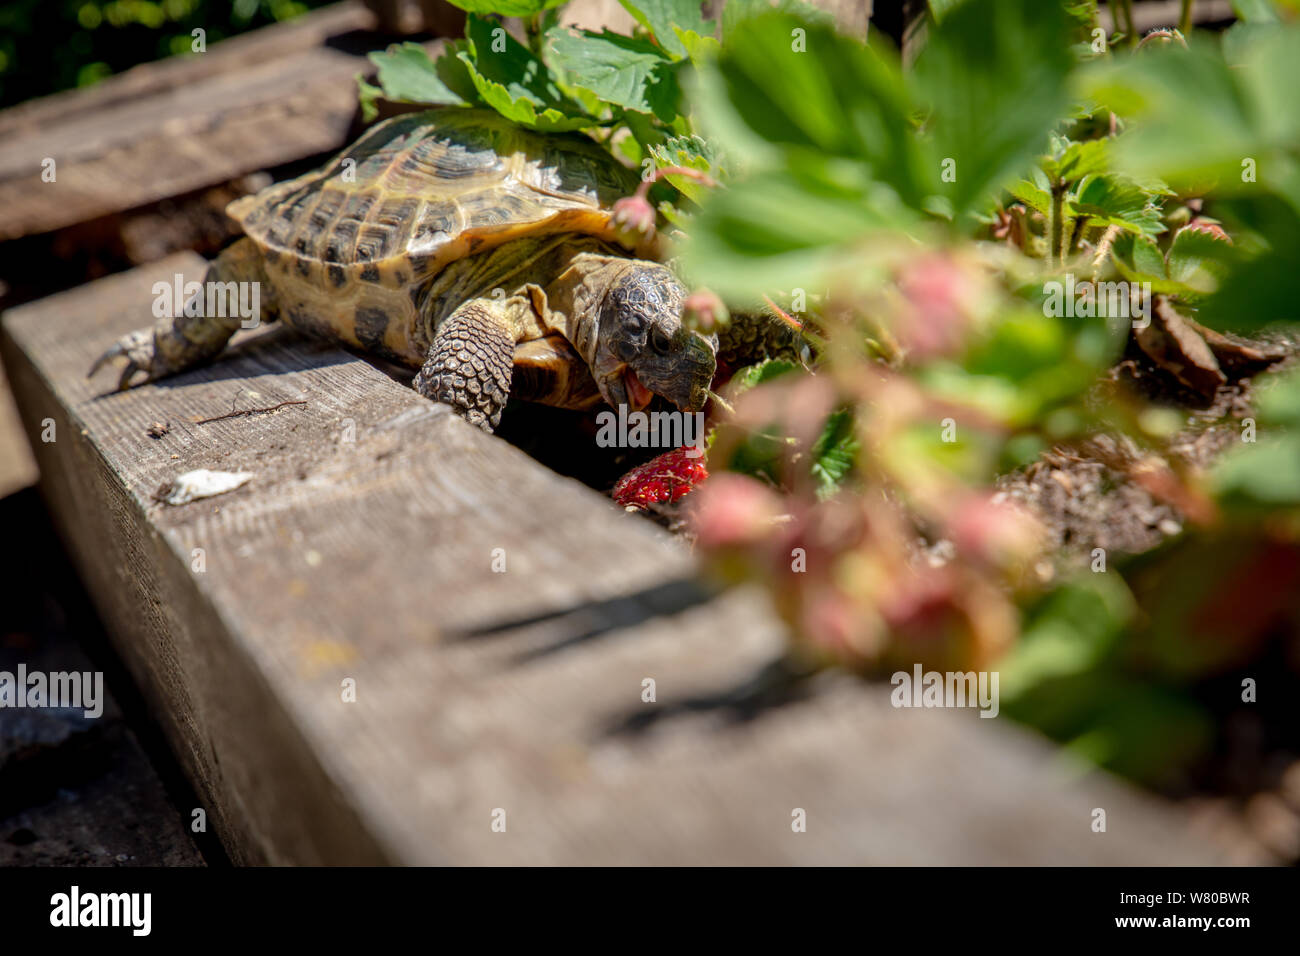 Russian tortoise eating strawberry Stock Photo